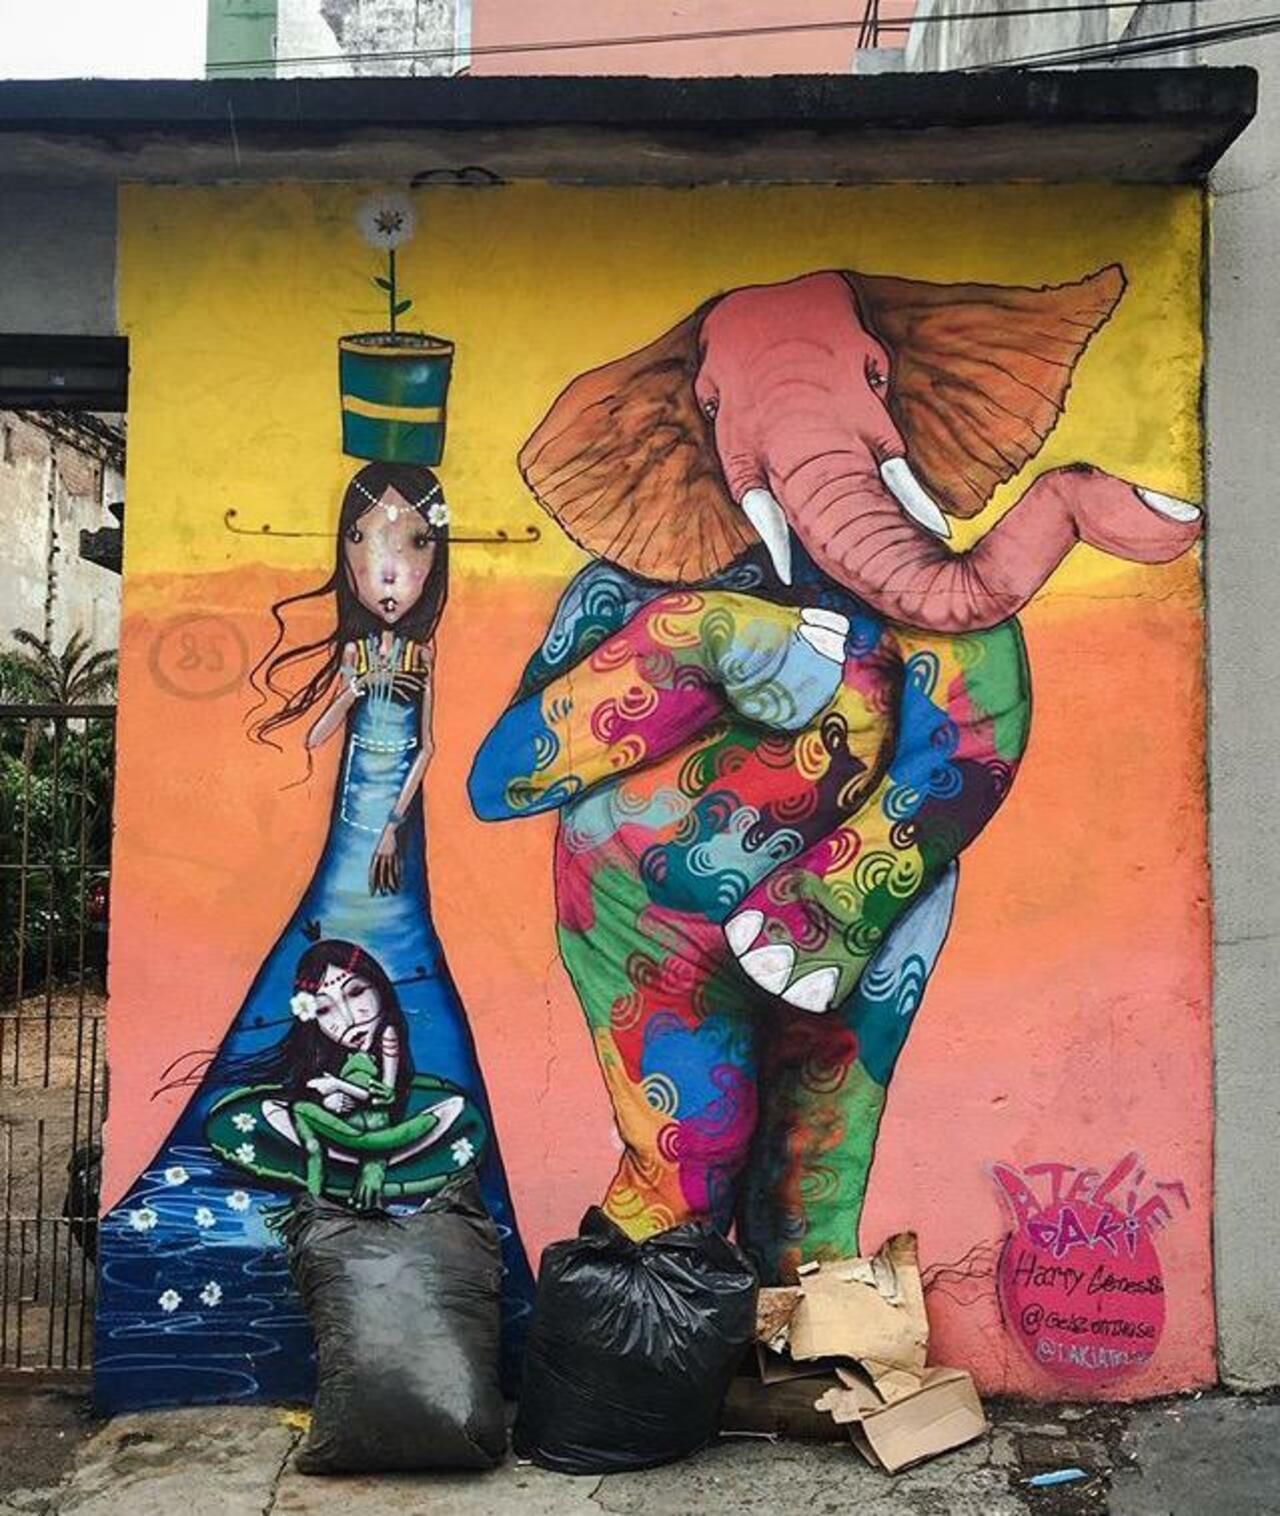 Street Art by Harry Geneis & Gelson in São Paulo #art #mural #graffiti #streetart http://t.co/SlLbhuMZfD … … … http://twitter.com/charlesjackso14/status/648017888343912448